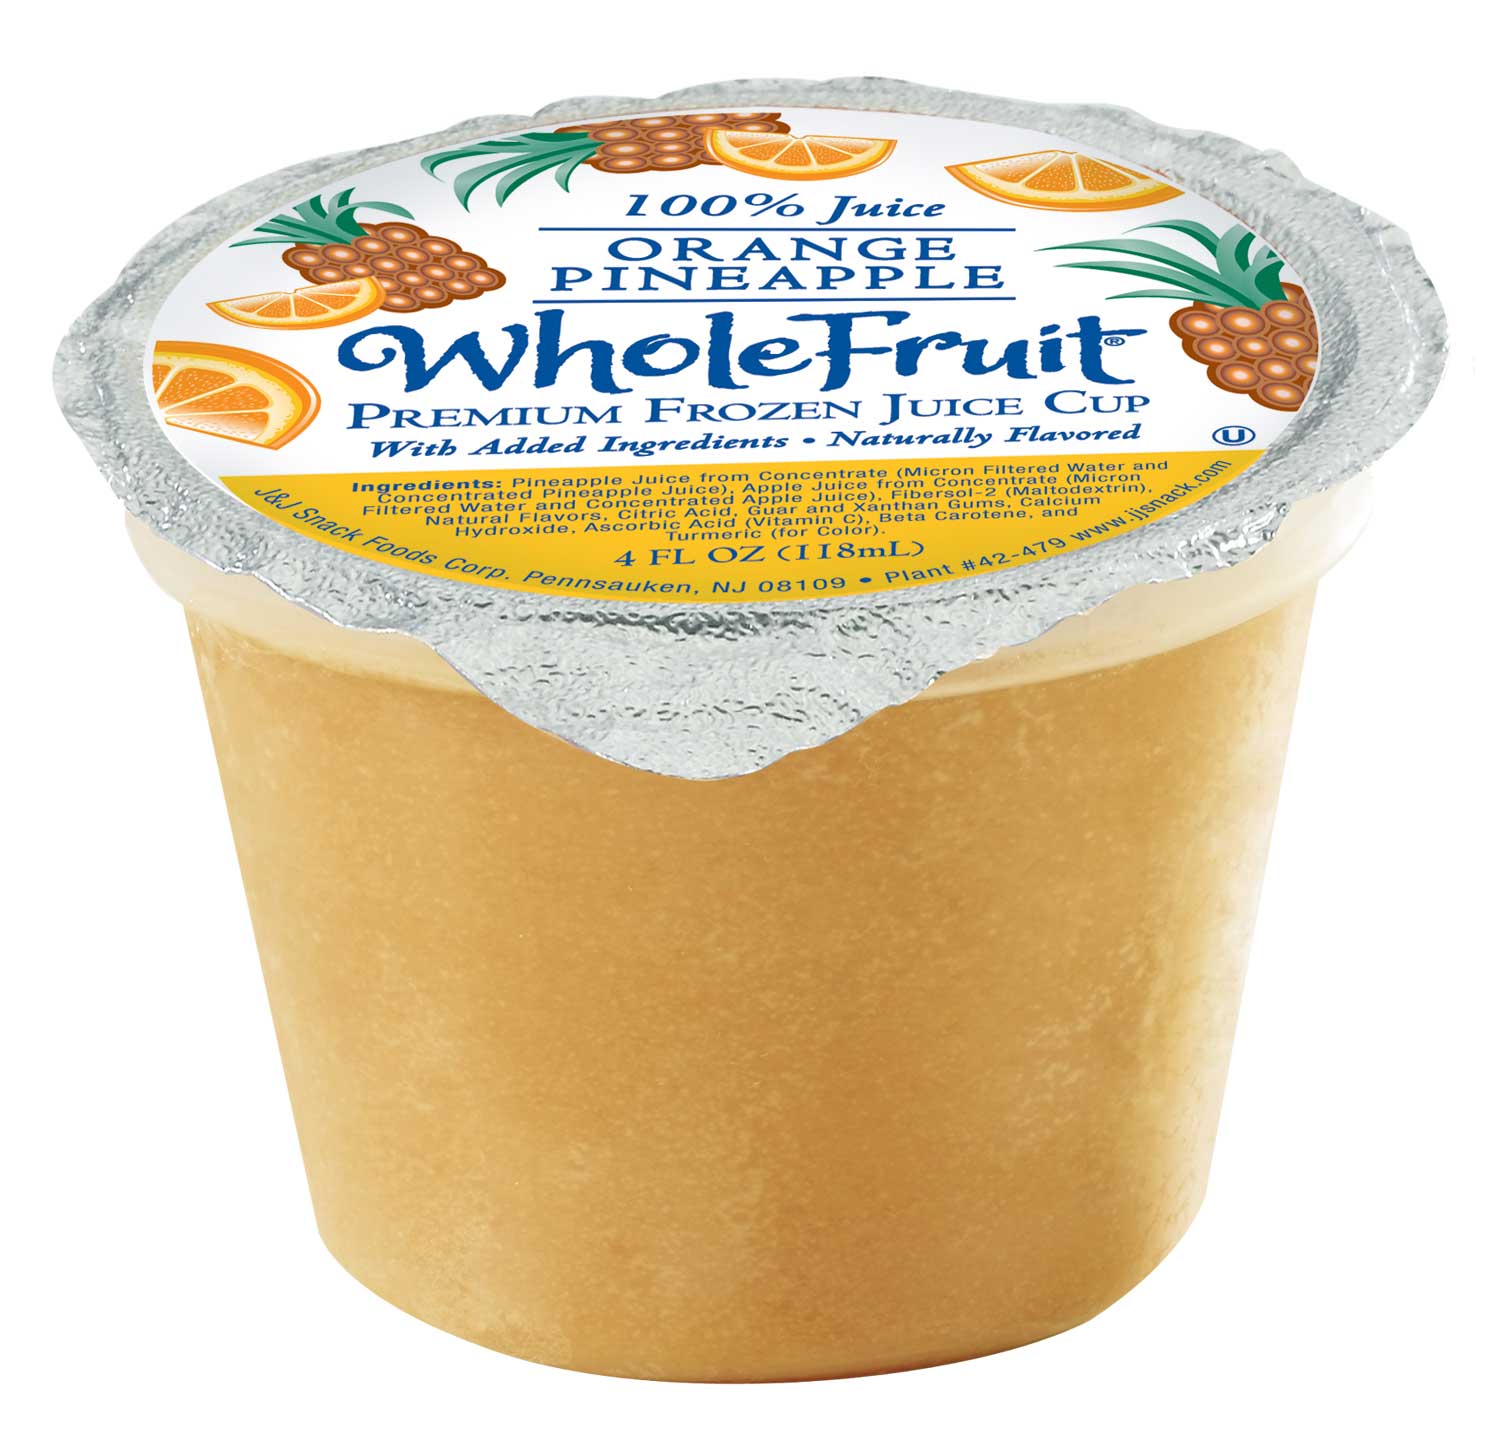 Whole Fruit Orange Pineapple Premium Frozen Juice Cup, 4.4 ounce -- 96 per case